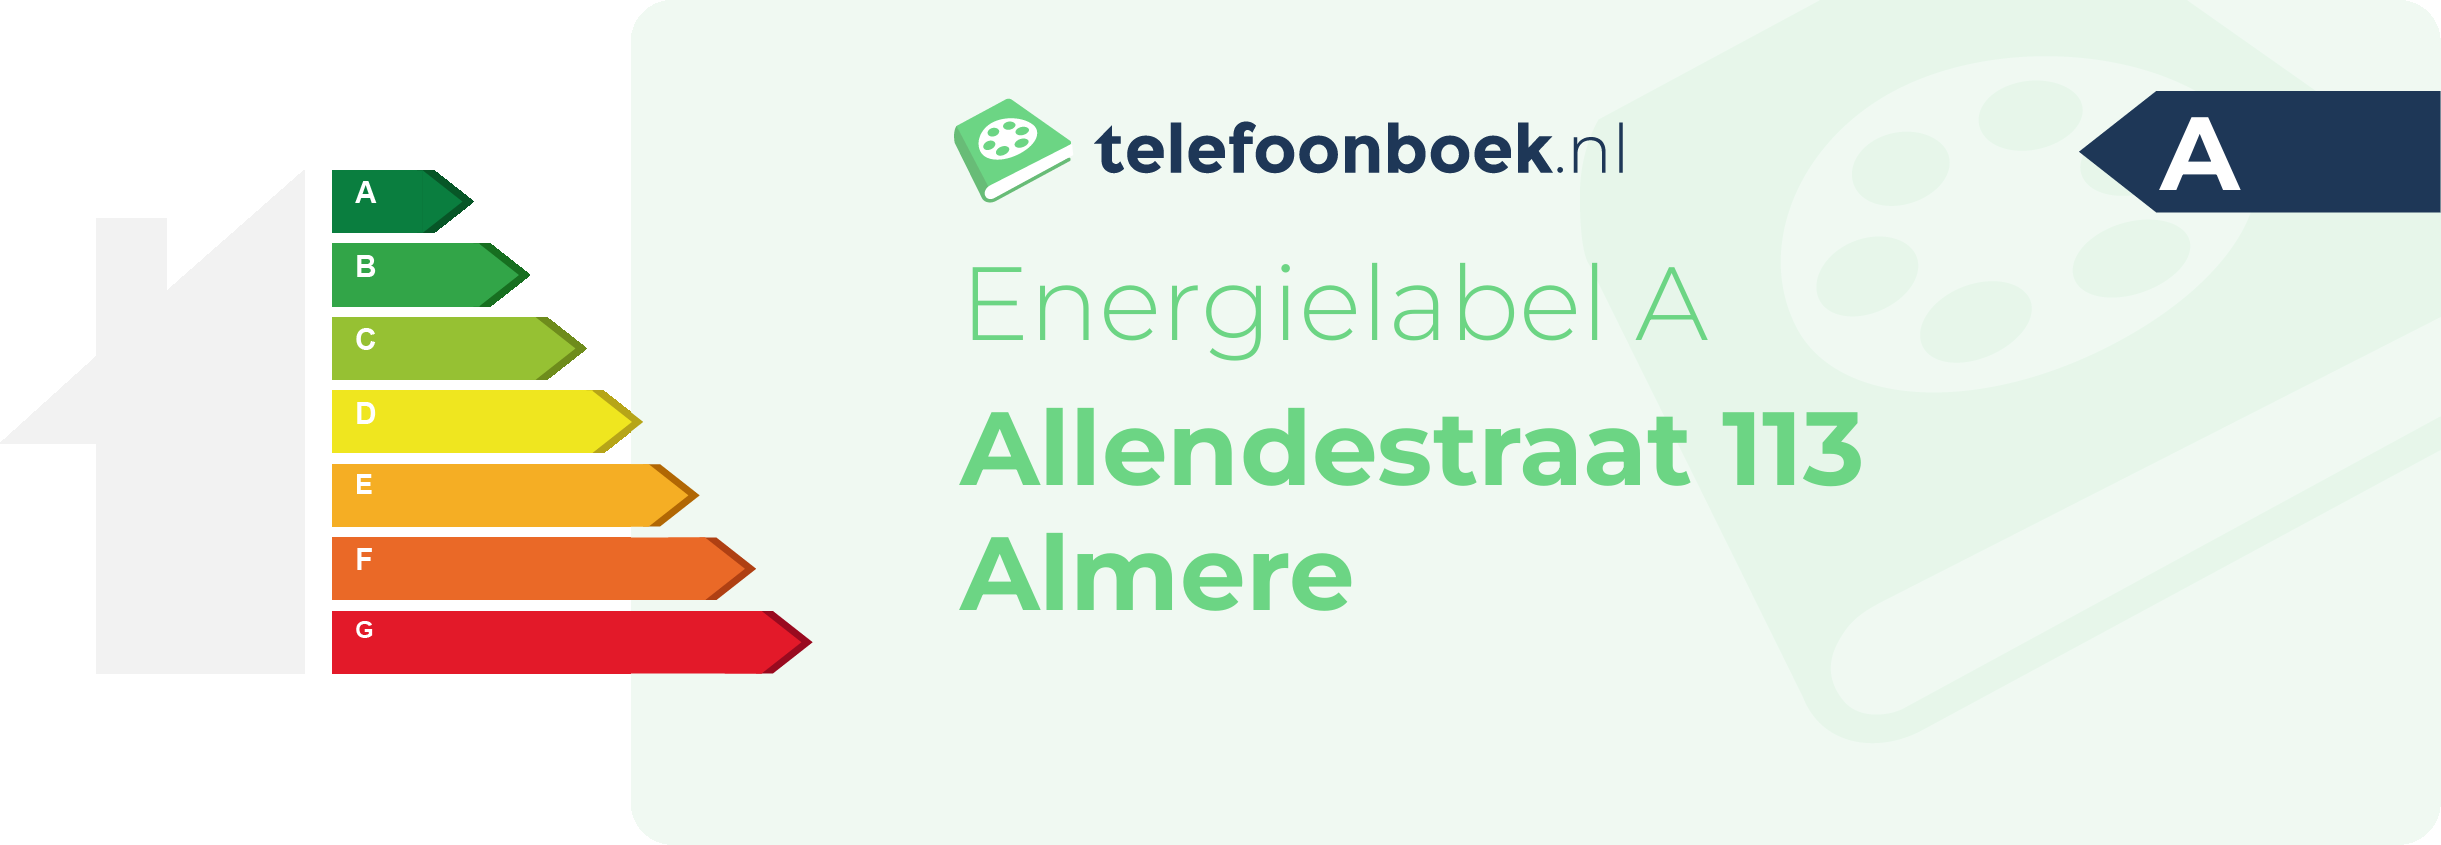 Energielabel Allendestraat 113 Almere